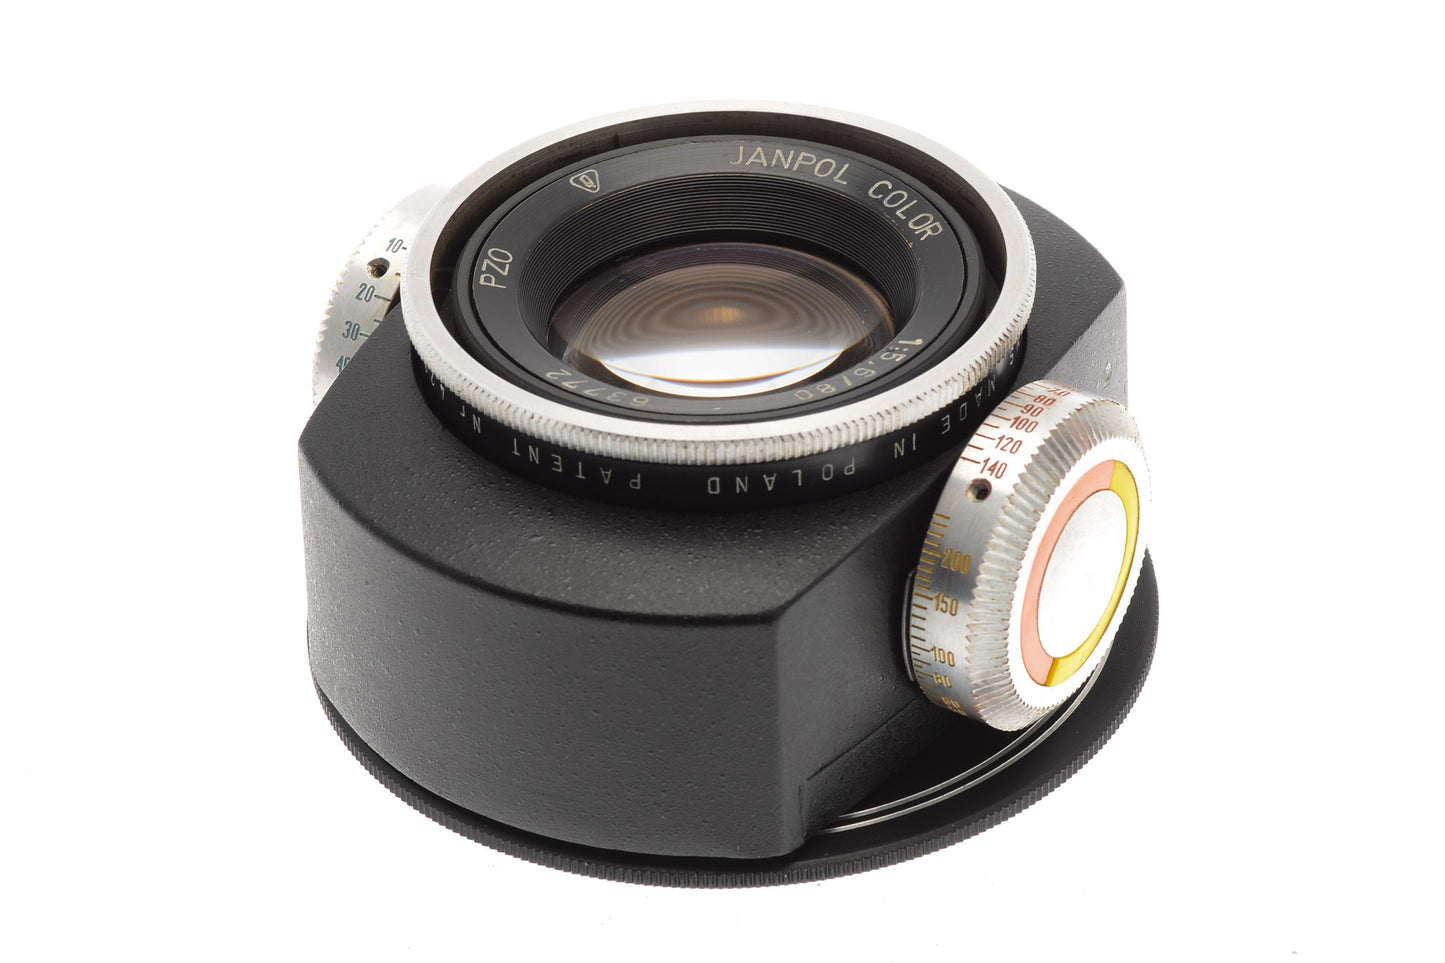 PZO Janpol Color 80mm f5.6 - Lens